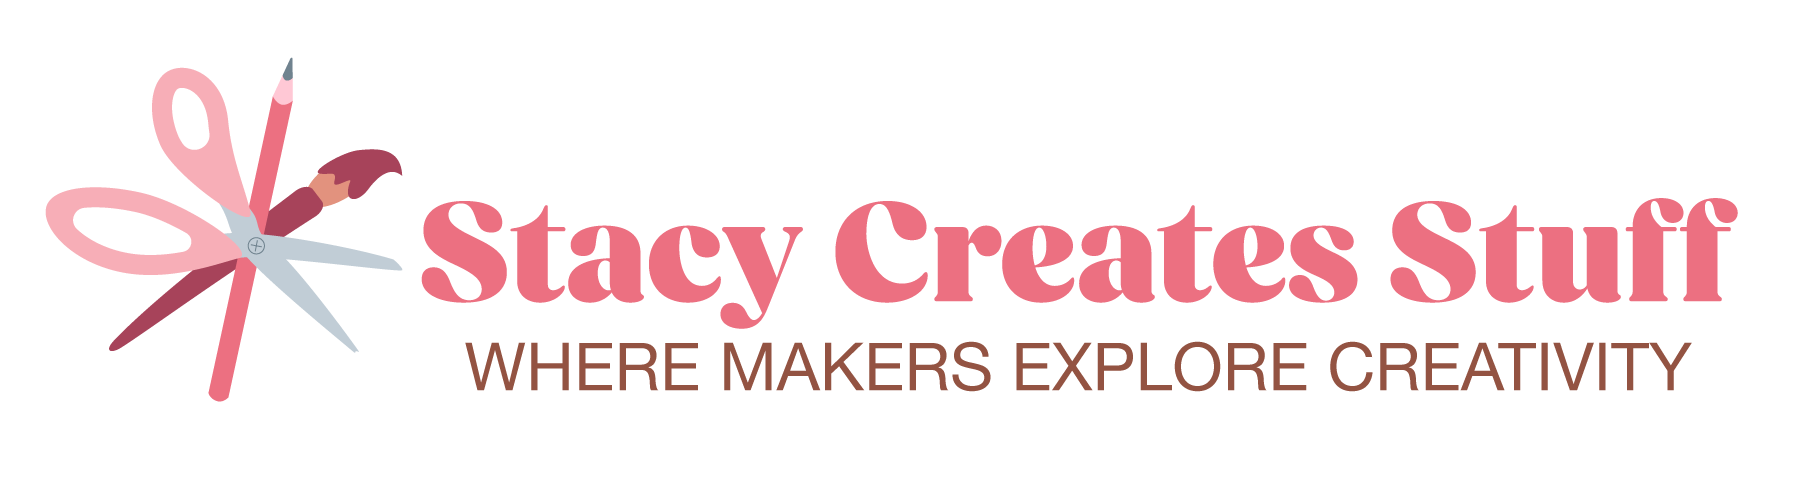 Stacy Creates Stuff: Where Makers Explore Creativity